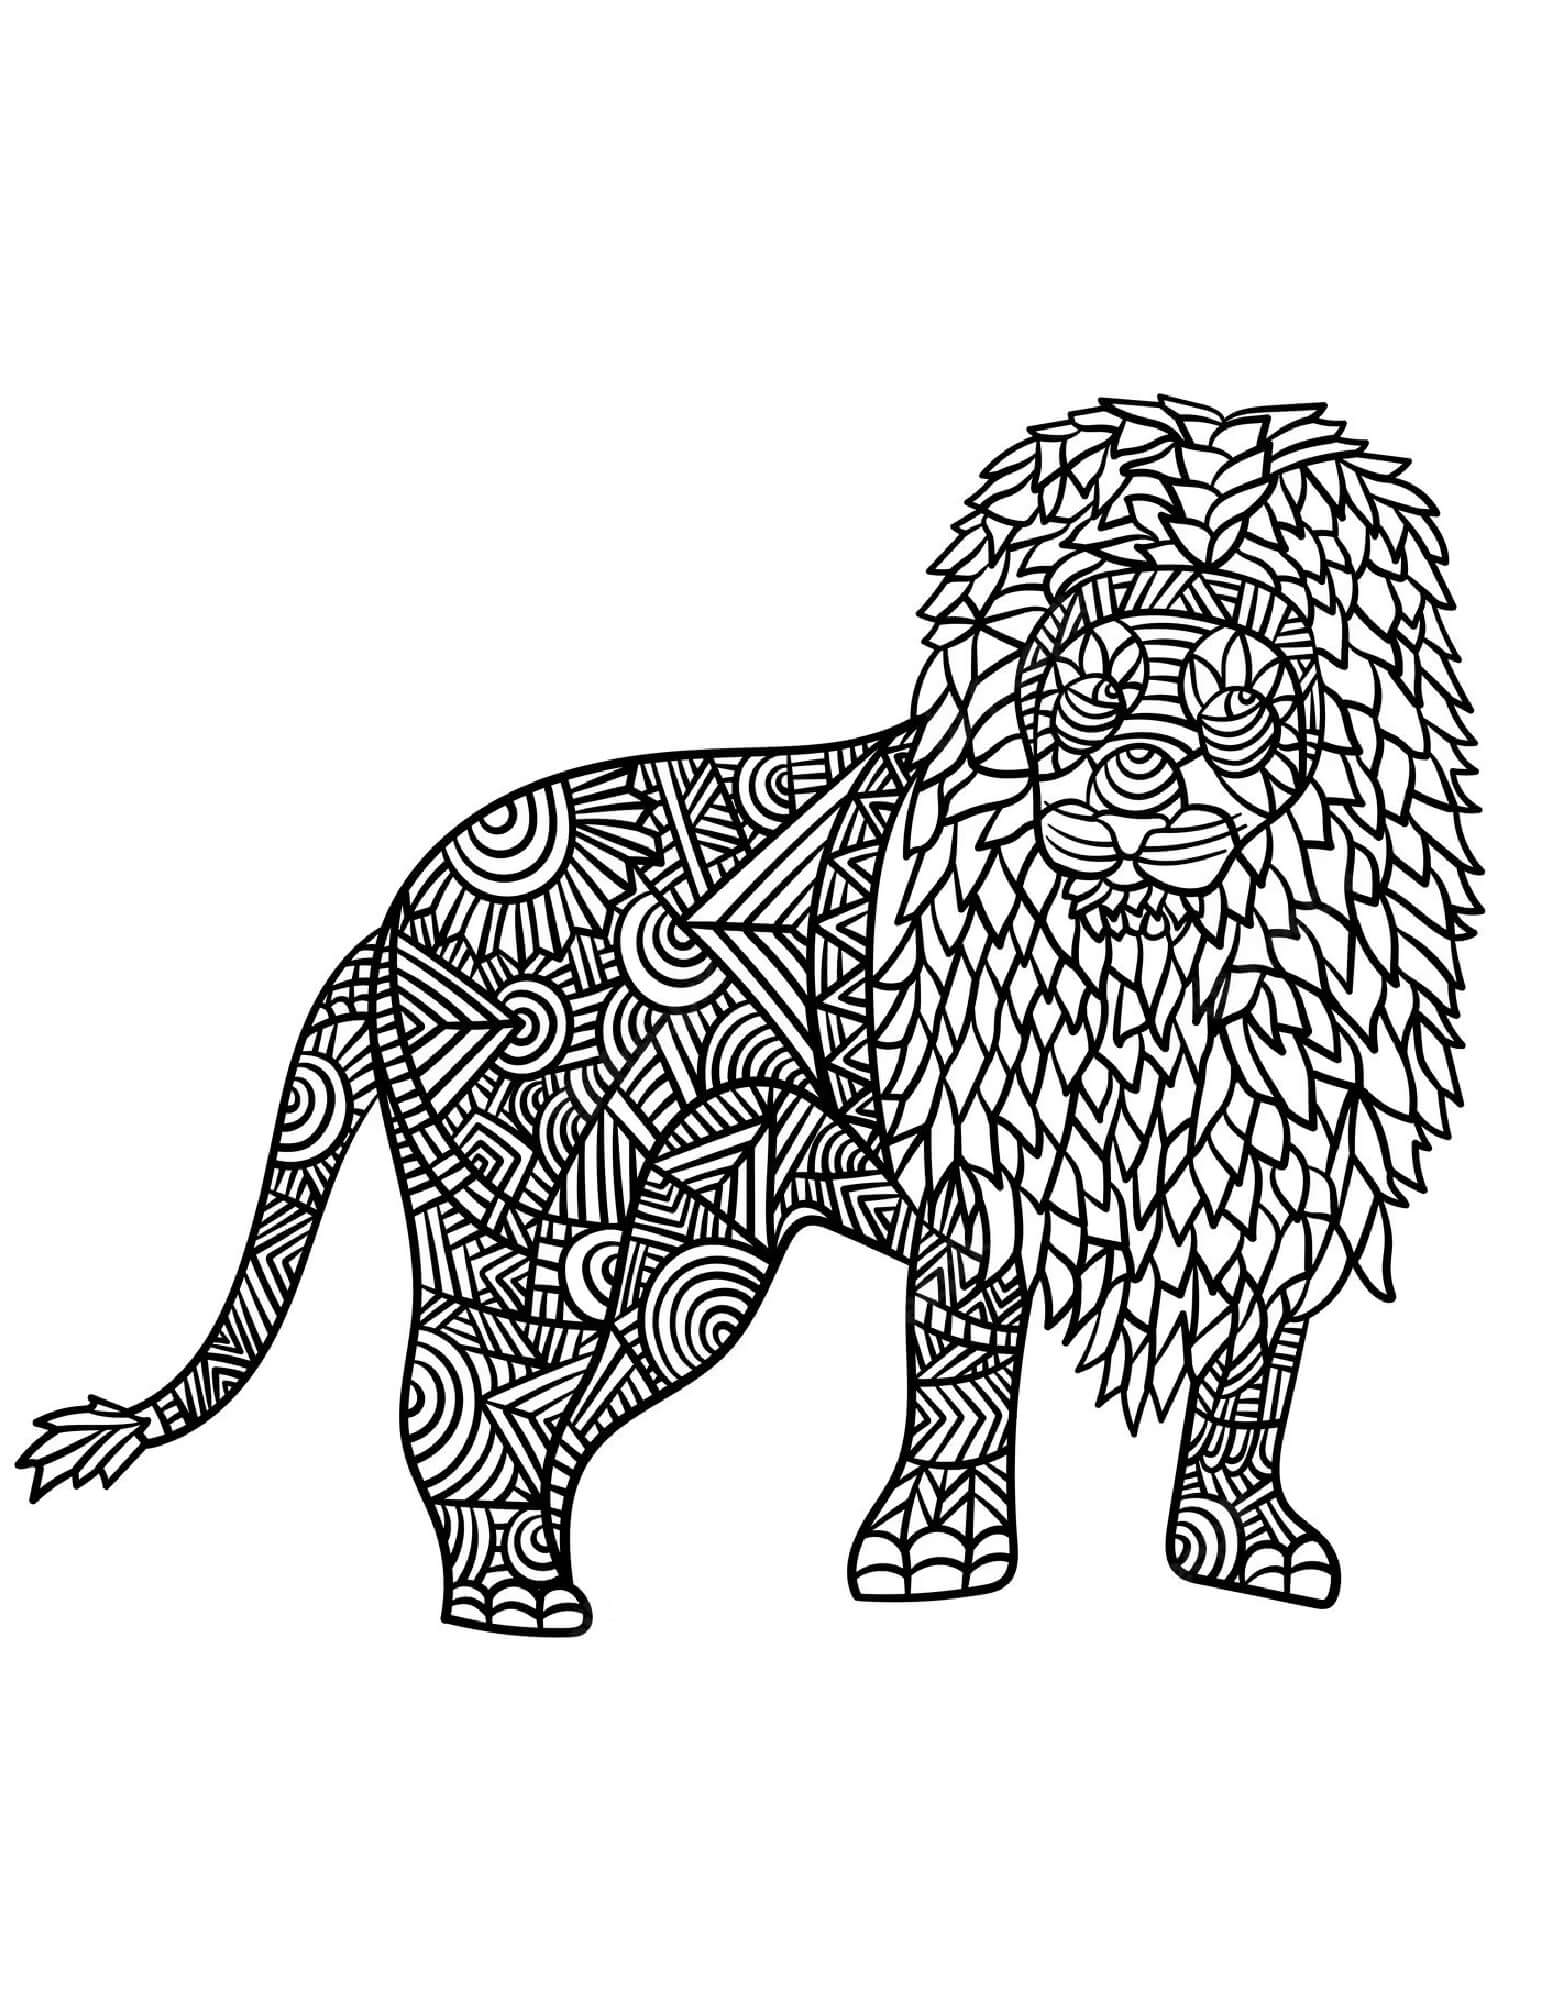 Mandala Cool Lion Coloring Page Mandalas